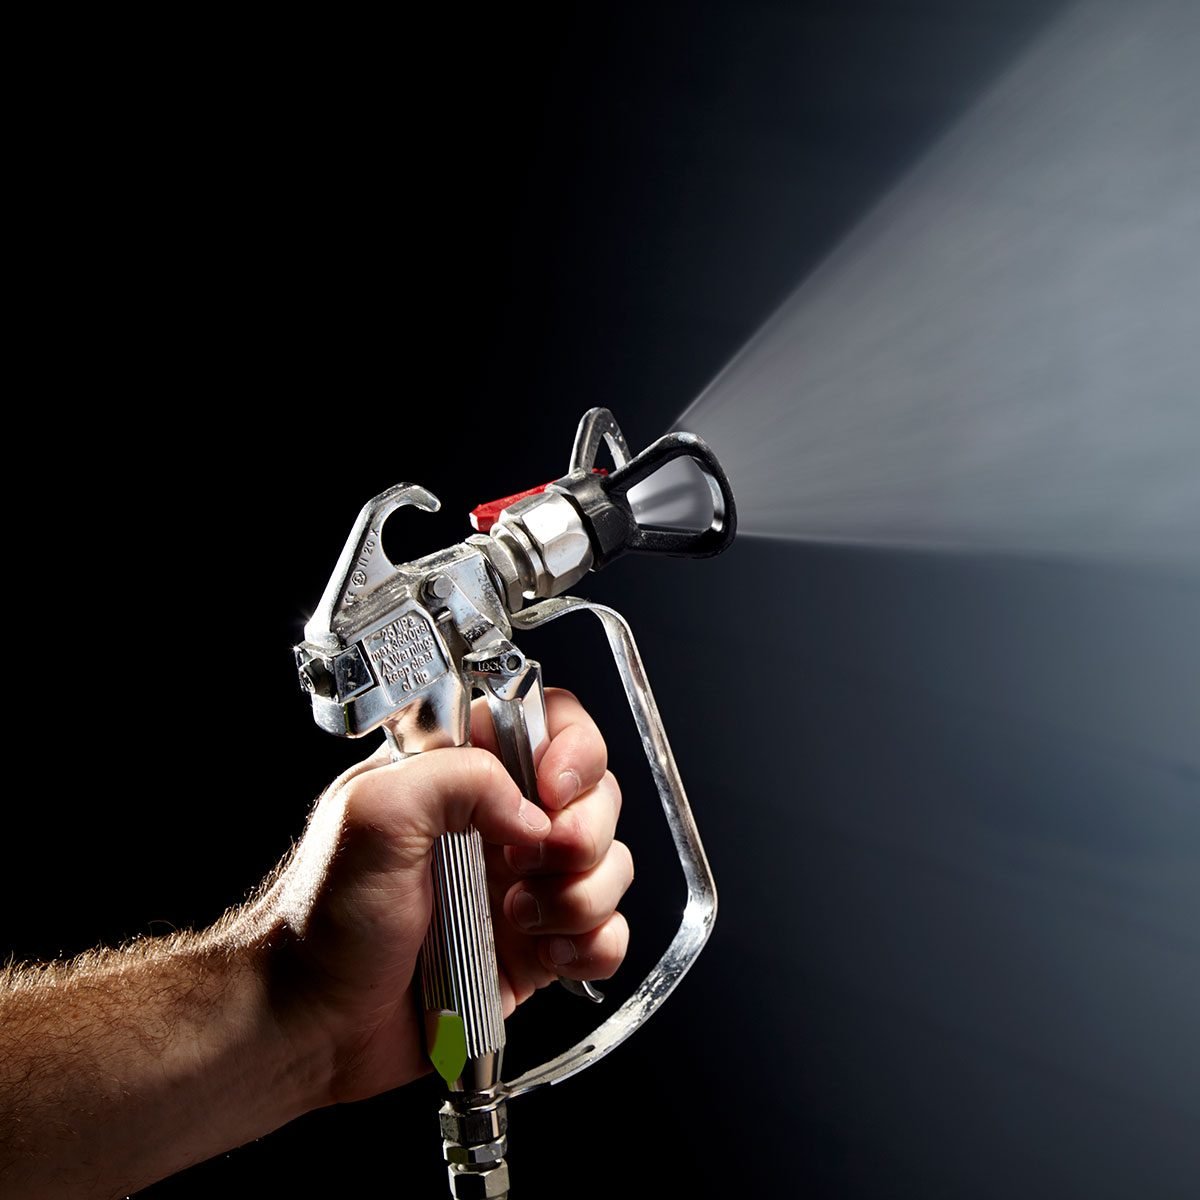 My Favorite Paint Sprayer Gun for DIY Home Improvement